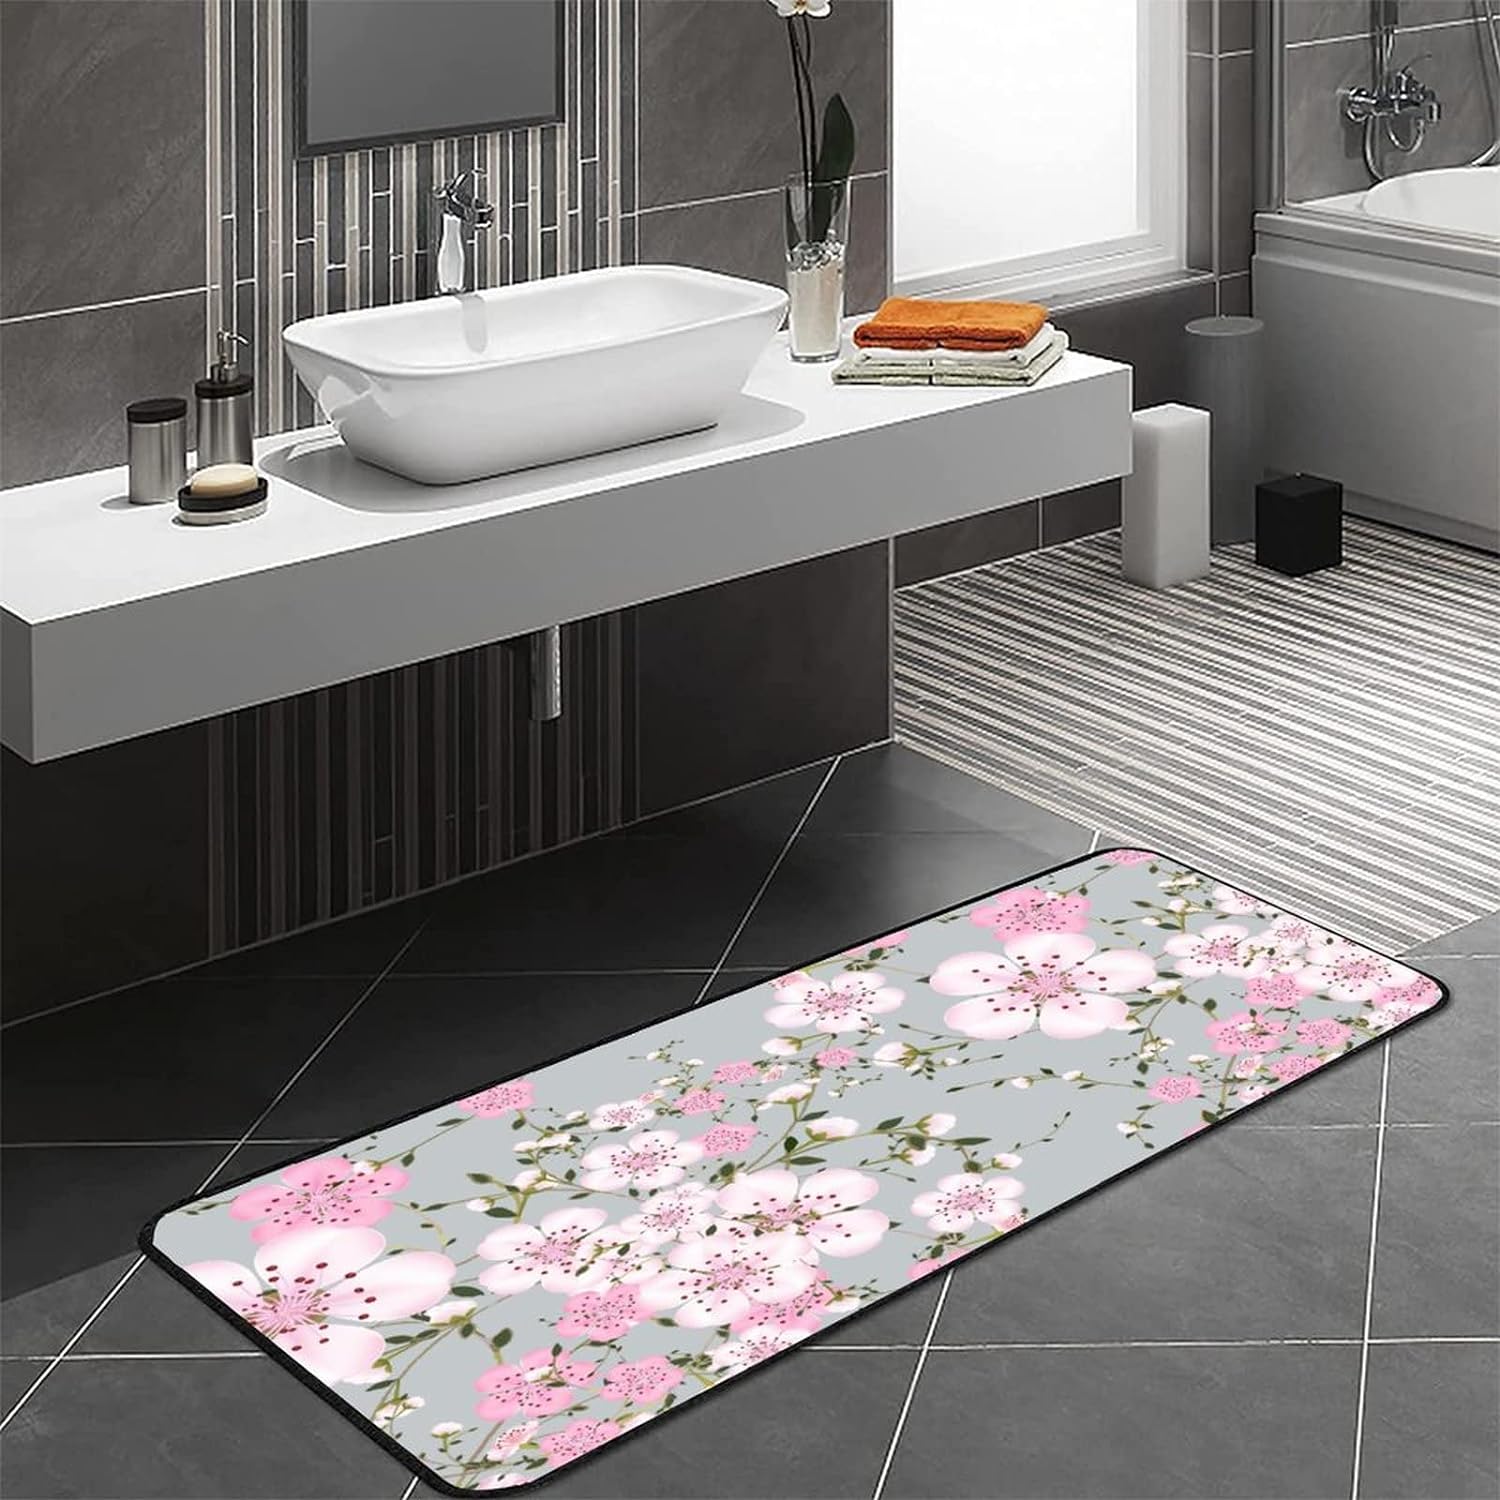 TsyTma Pink Cute Ghost Kitchen Rug Non-Slip Pink Halloween Kitchen Floor Mat Bathroom Rug Area Mat Carpet for Home Decor 39x20